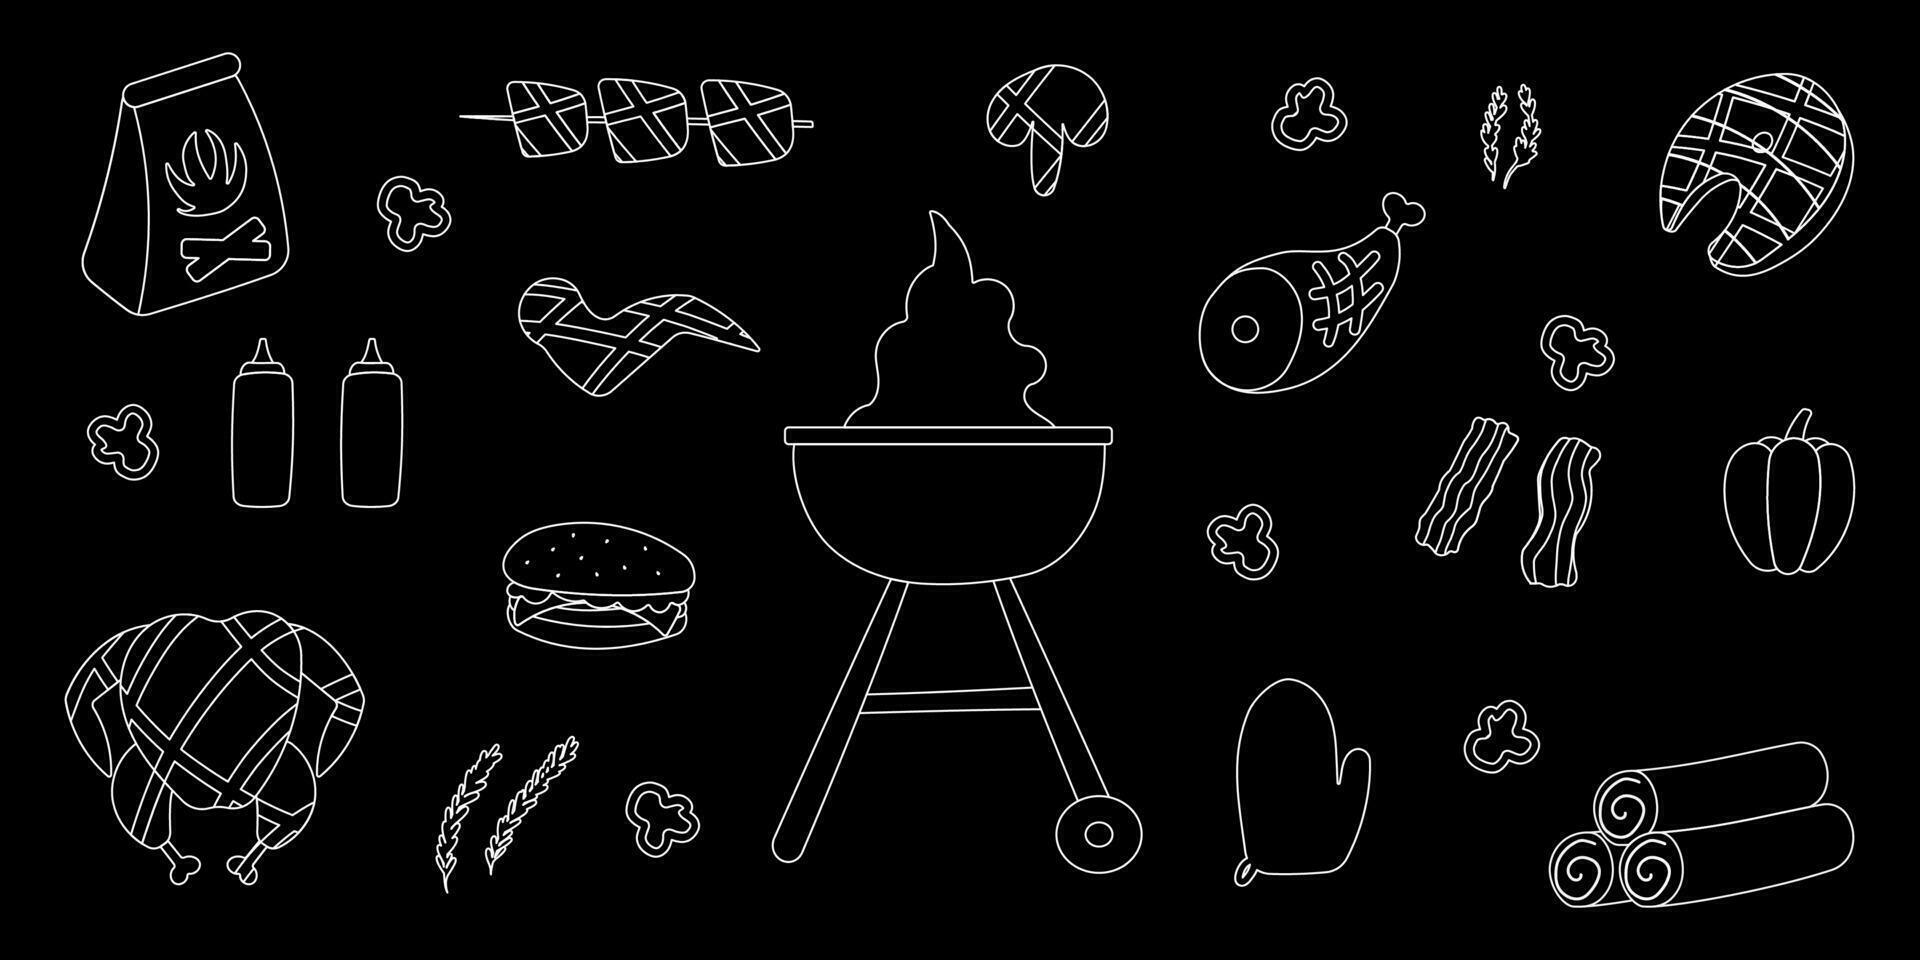 bbq grill party line doodle elements set vector